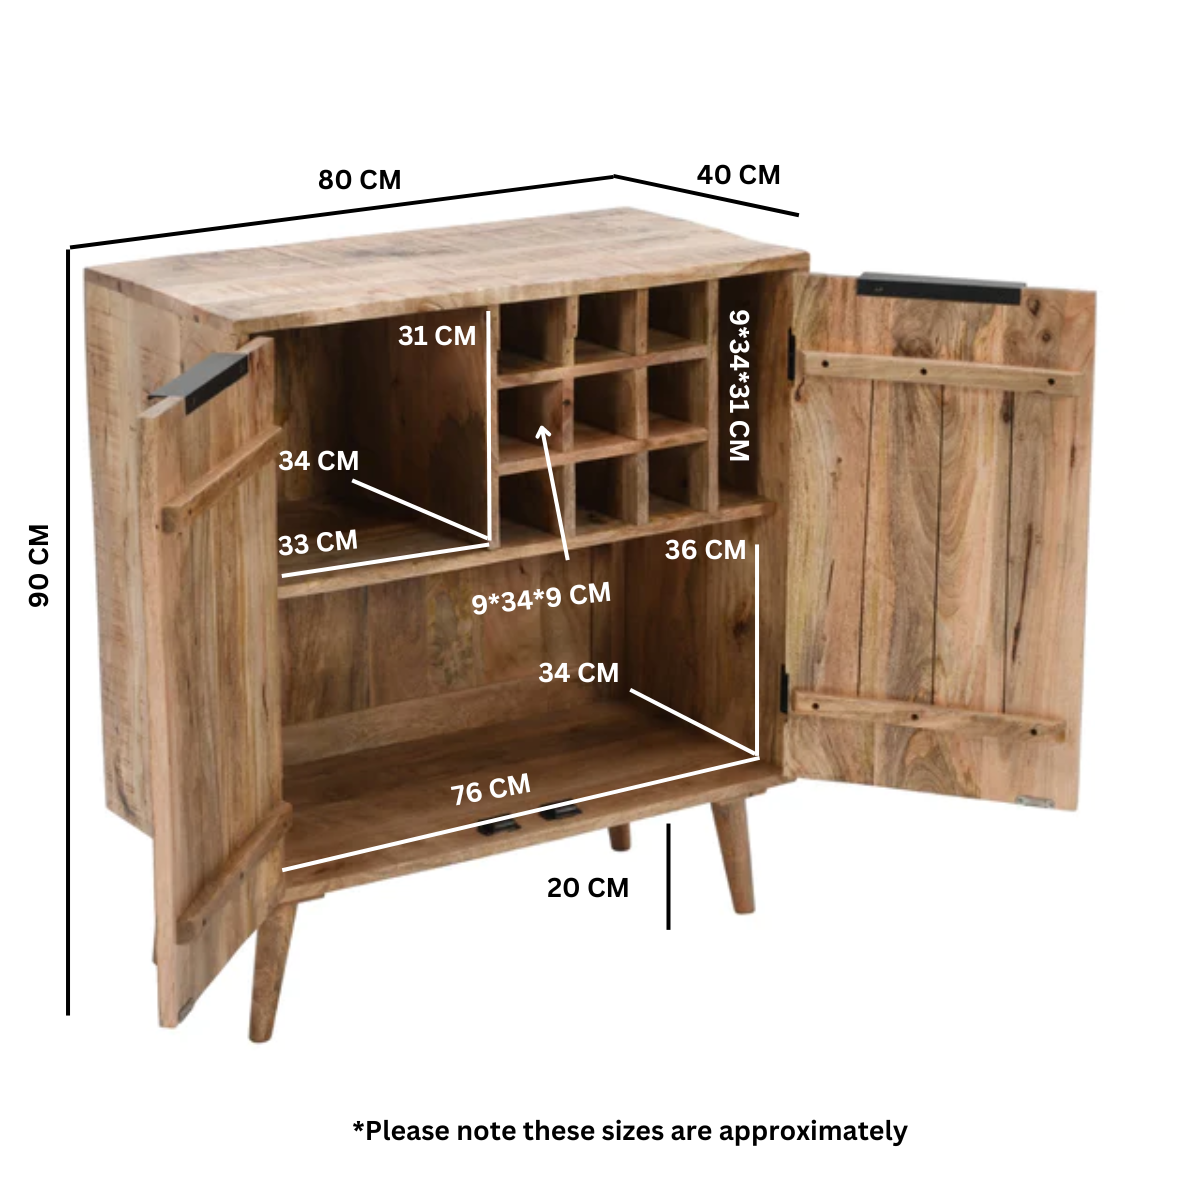 Surrey Solid Wood Drinks Cabinet / Sideboard